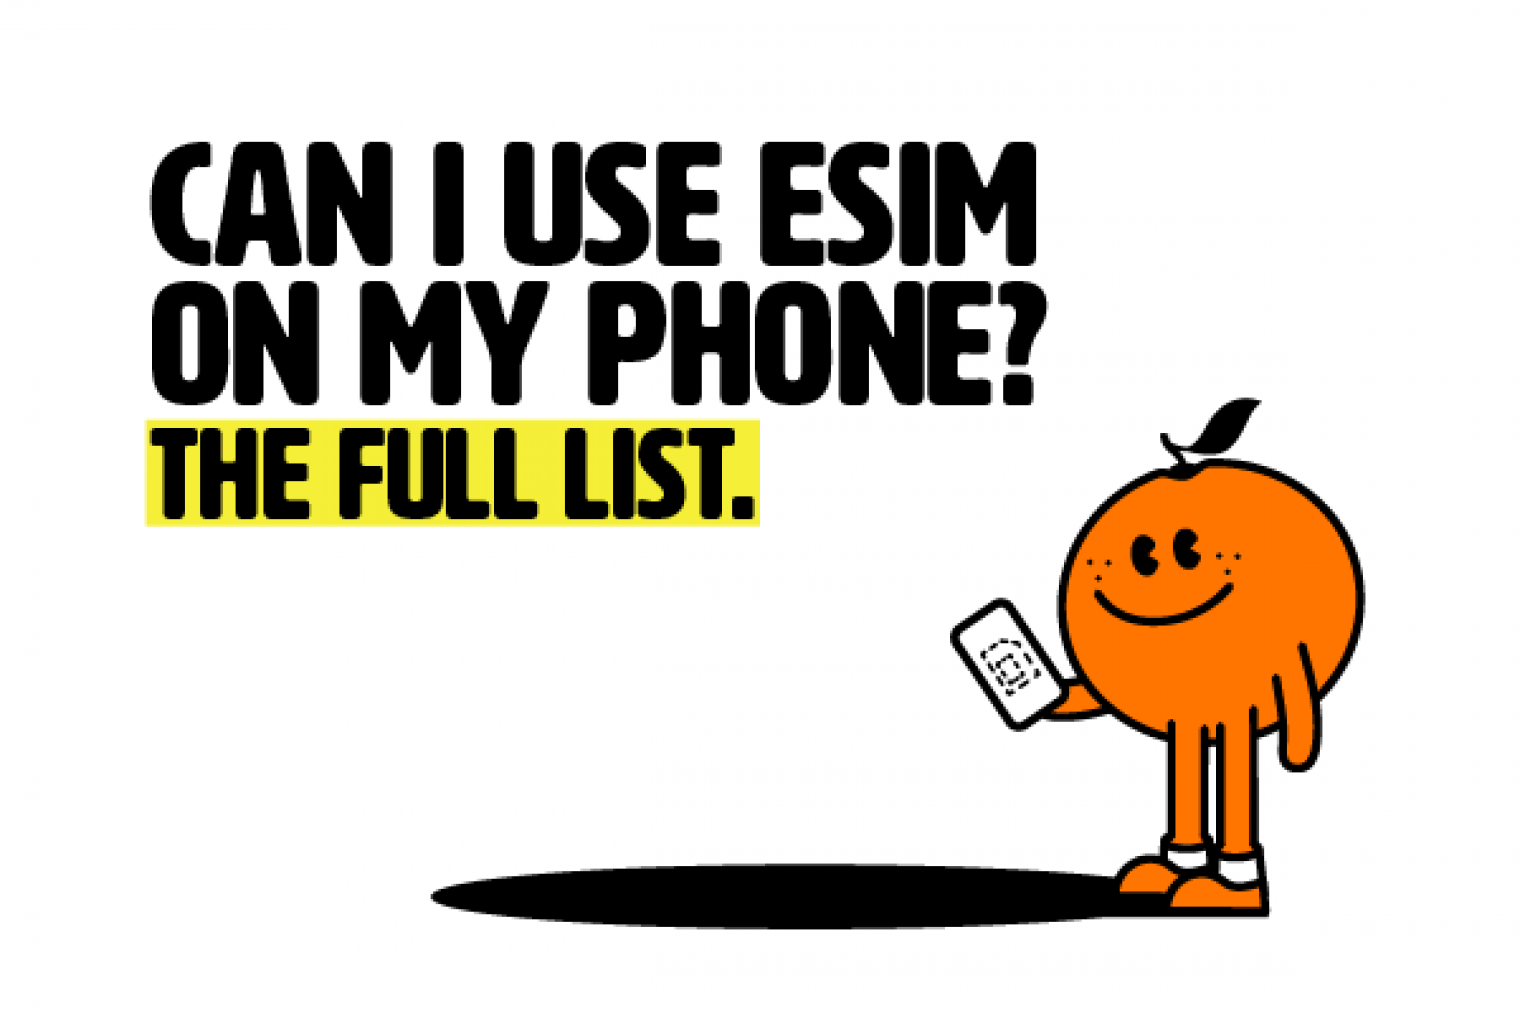 Can I use eSIM on my phone? The full list.